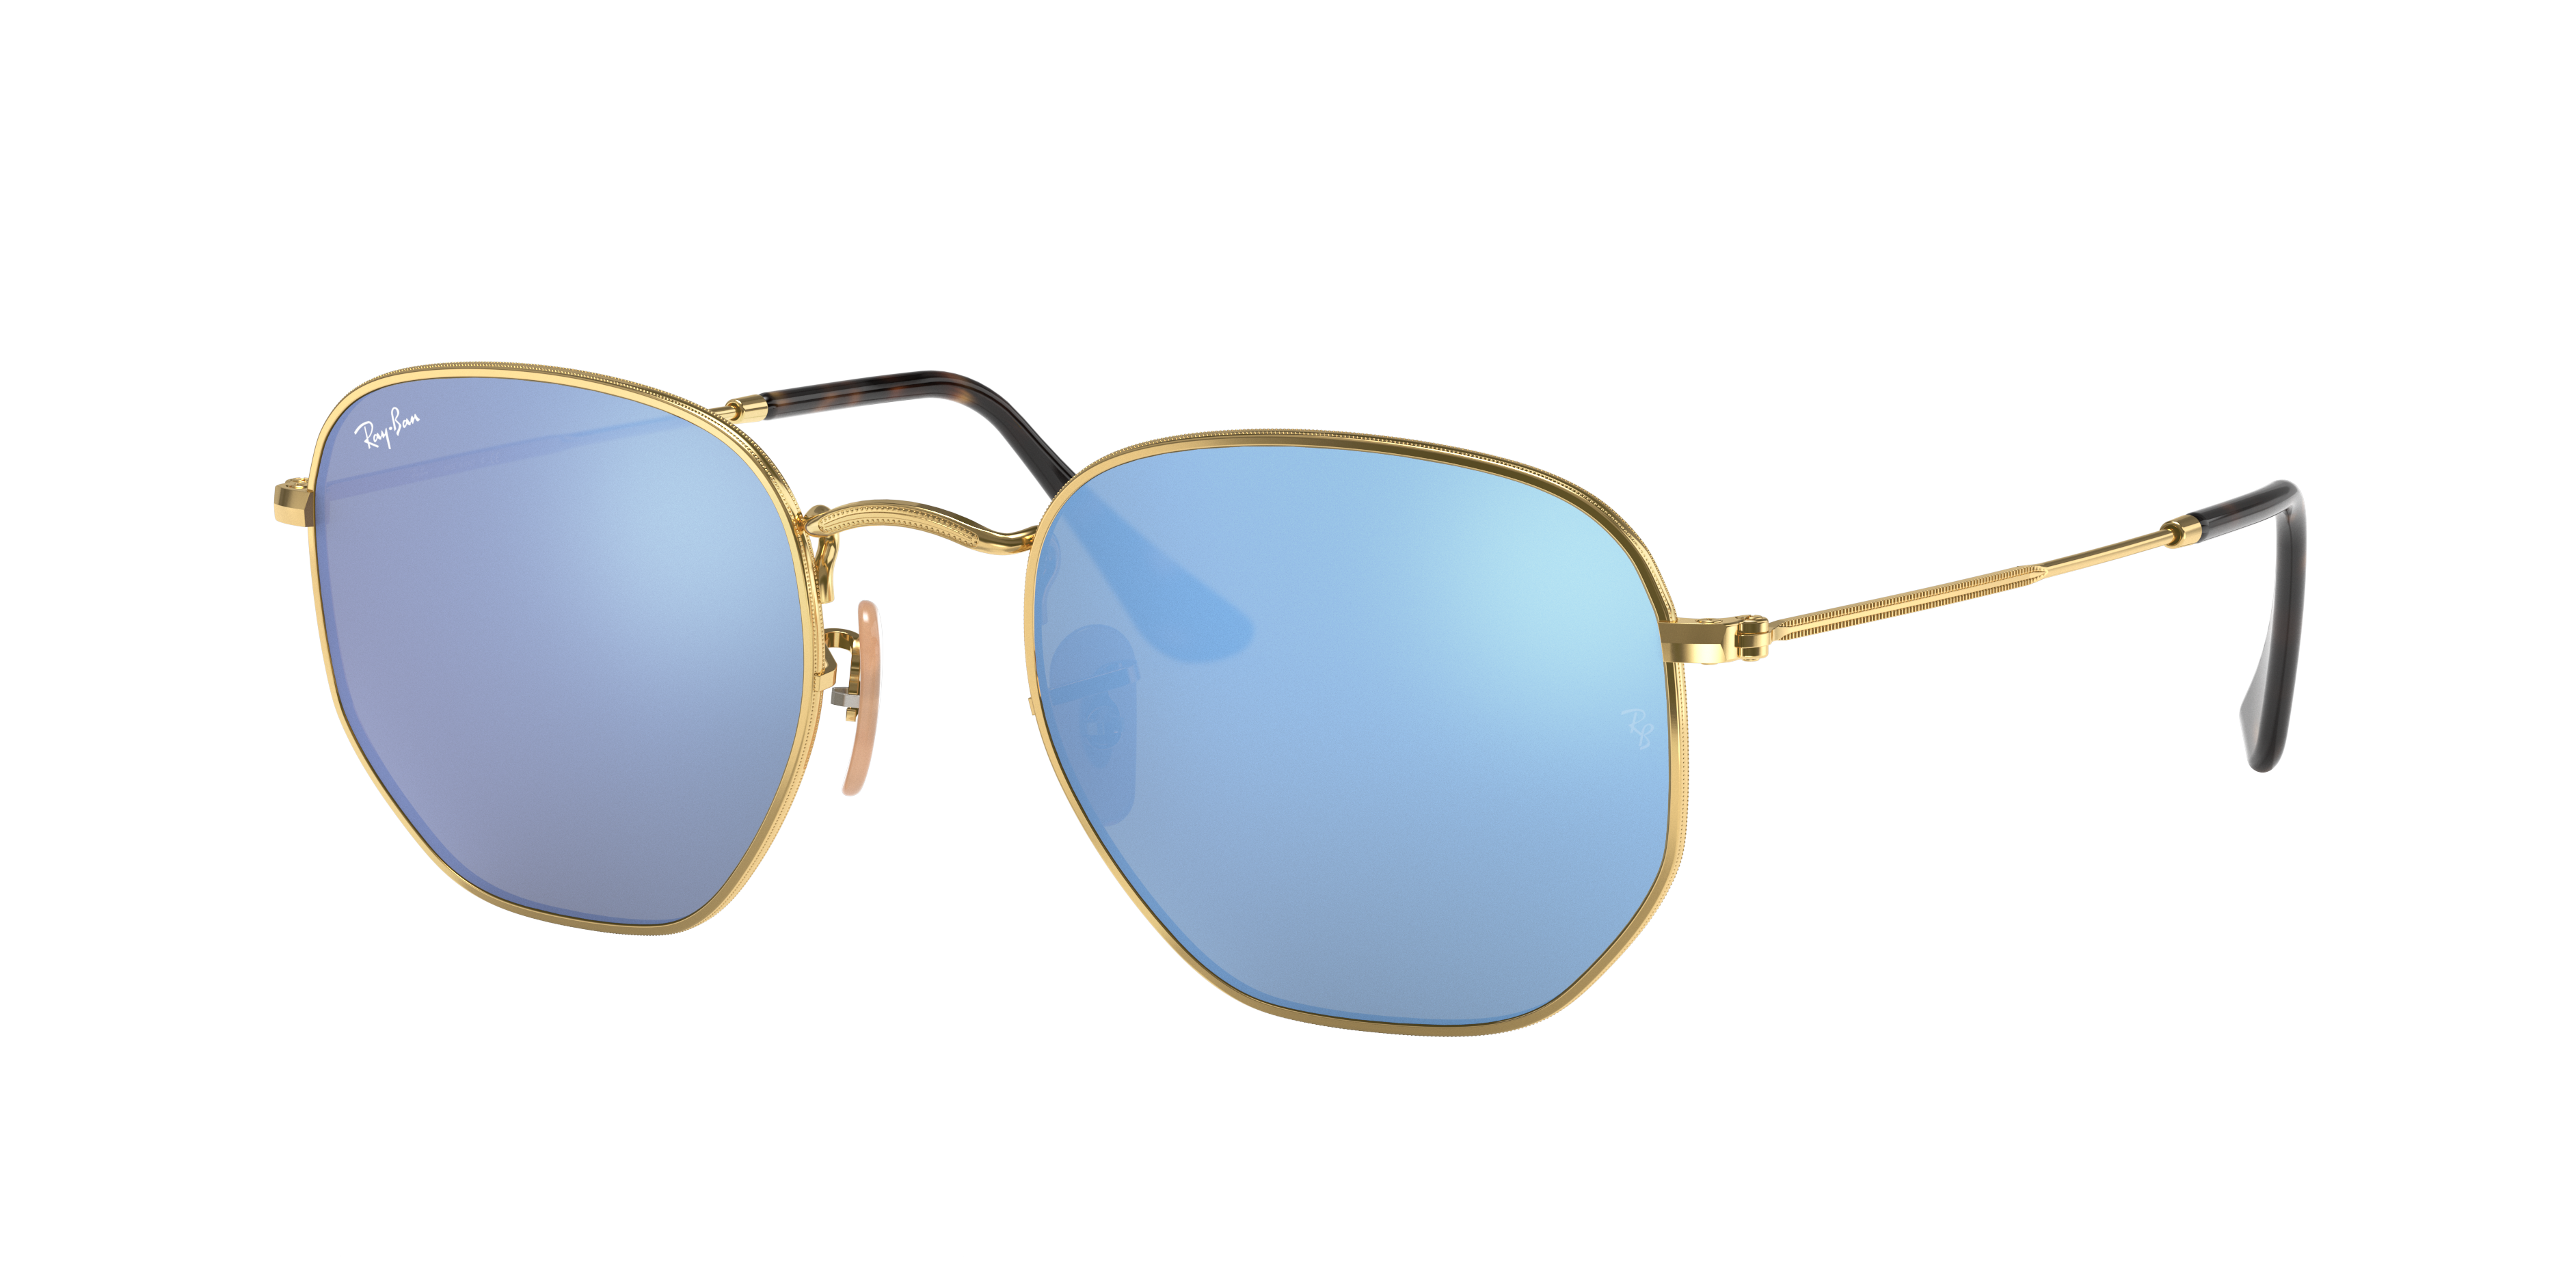 Hexagonal Flat Lenses Sunglasses in Gold and Light Blue - RB3548N | Ray